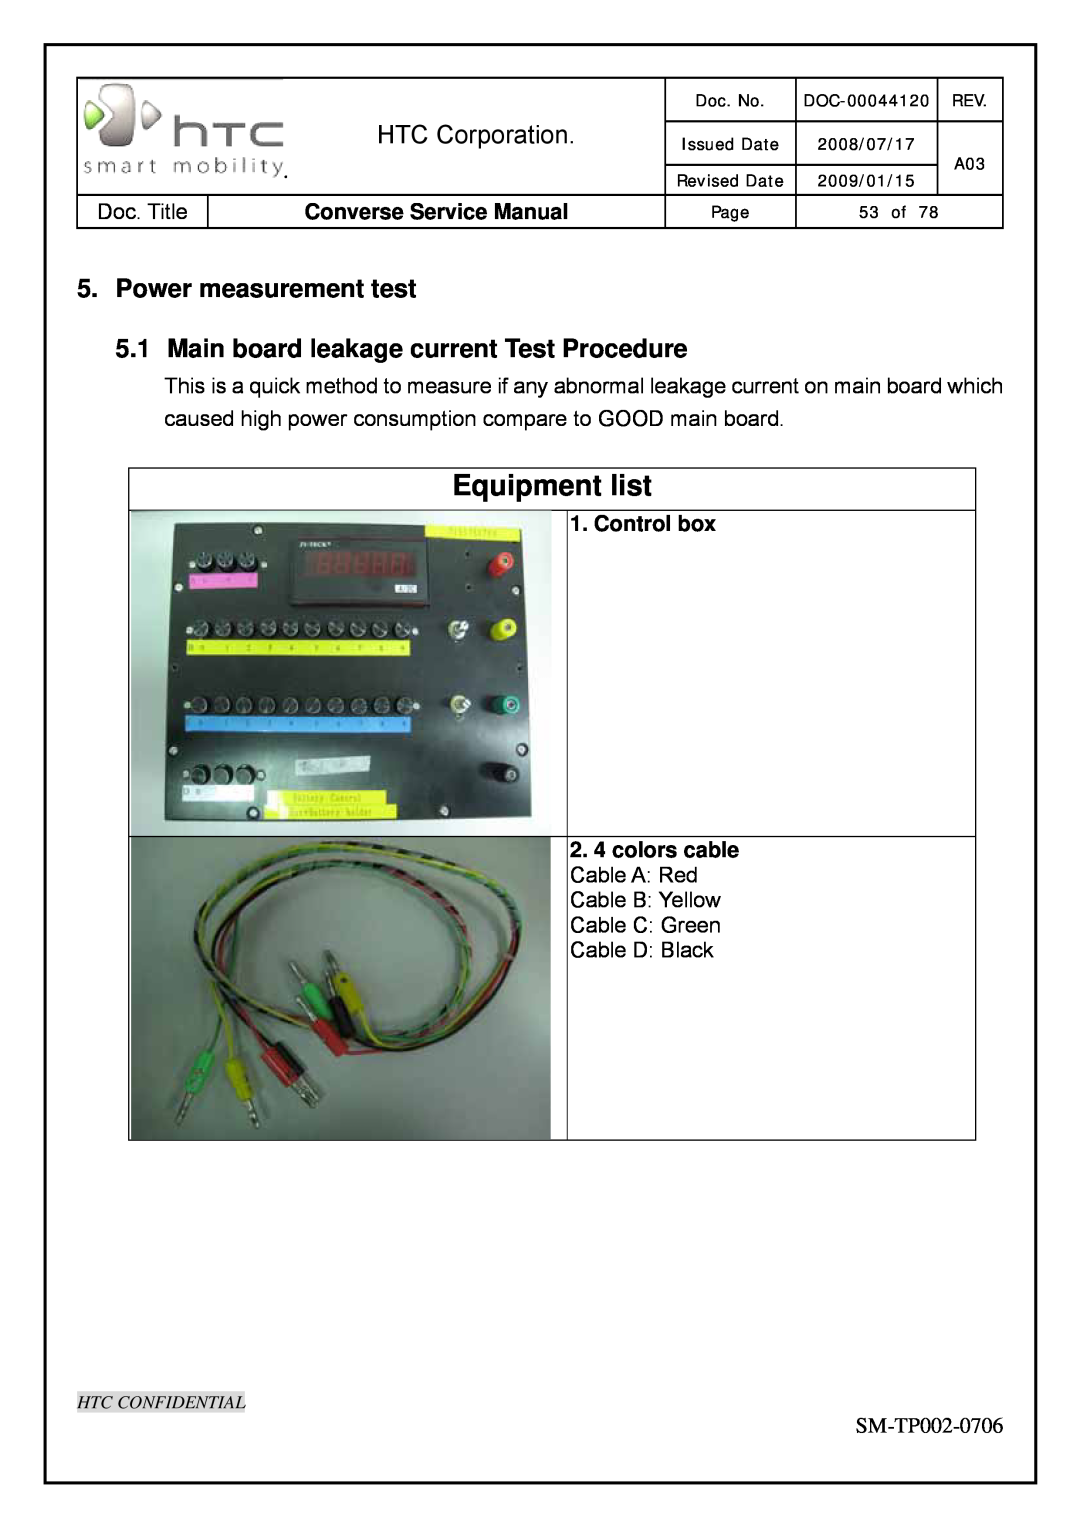 HTC SM-TP002-0706 Equipment list, Power measurement test, Main board leakage current Test Procedure, Control box 